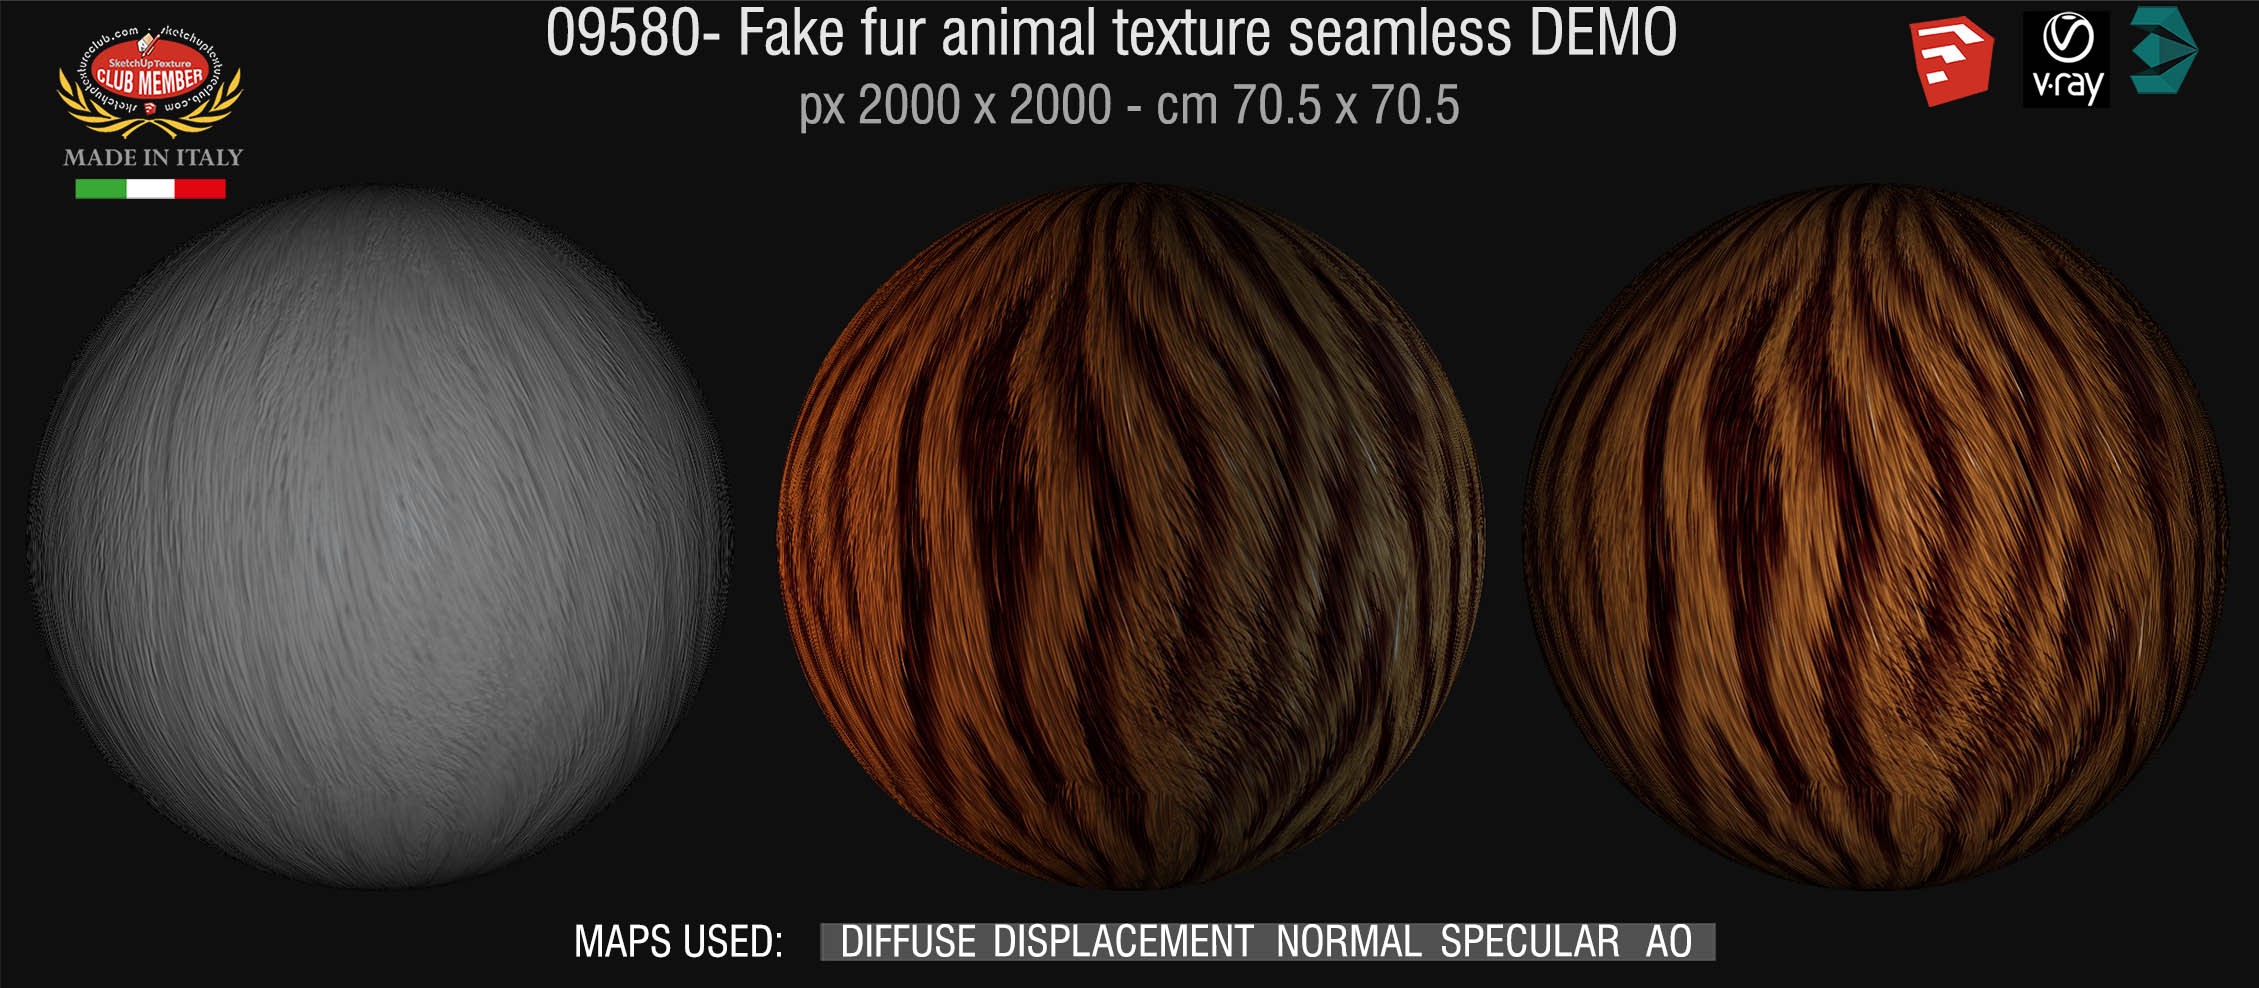 09580 HR fake fur animal texture seamless + maps DEMO